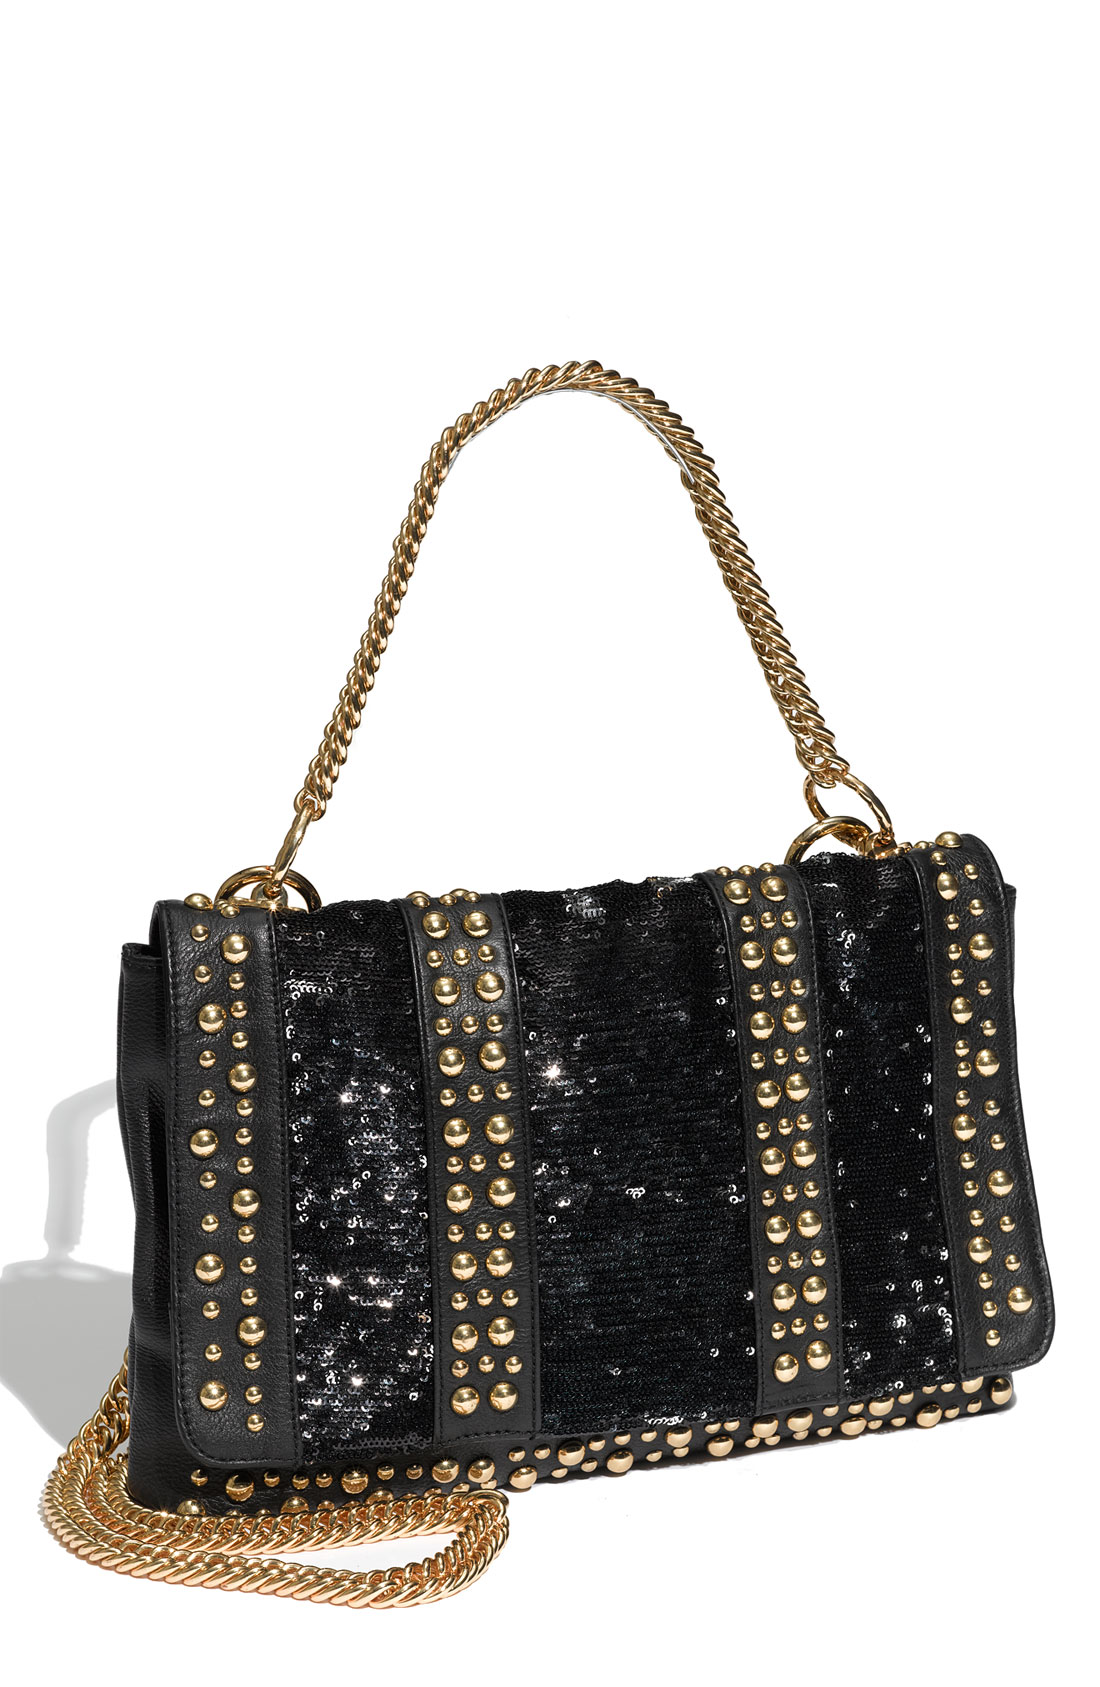 Halston Heritage Carla Studded Leather Crossbody Bag in Black (jet/ gold) | Lyst